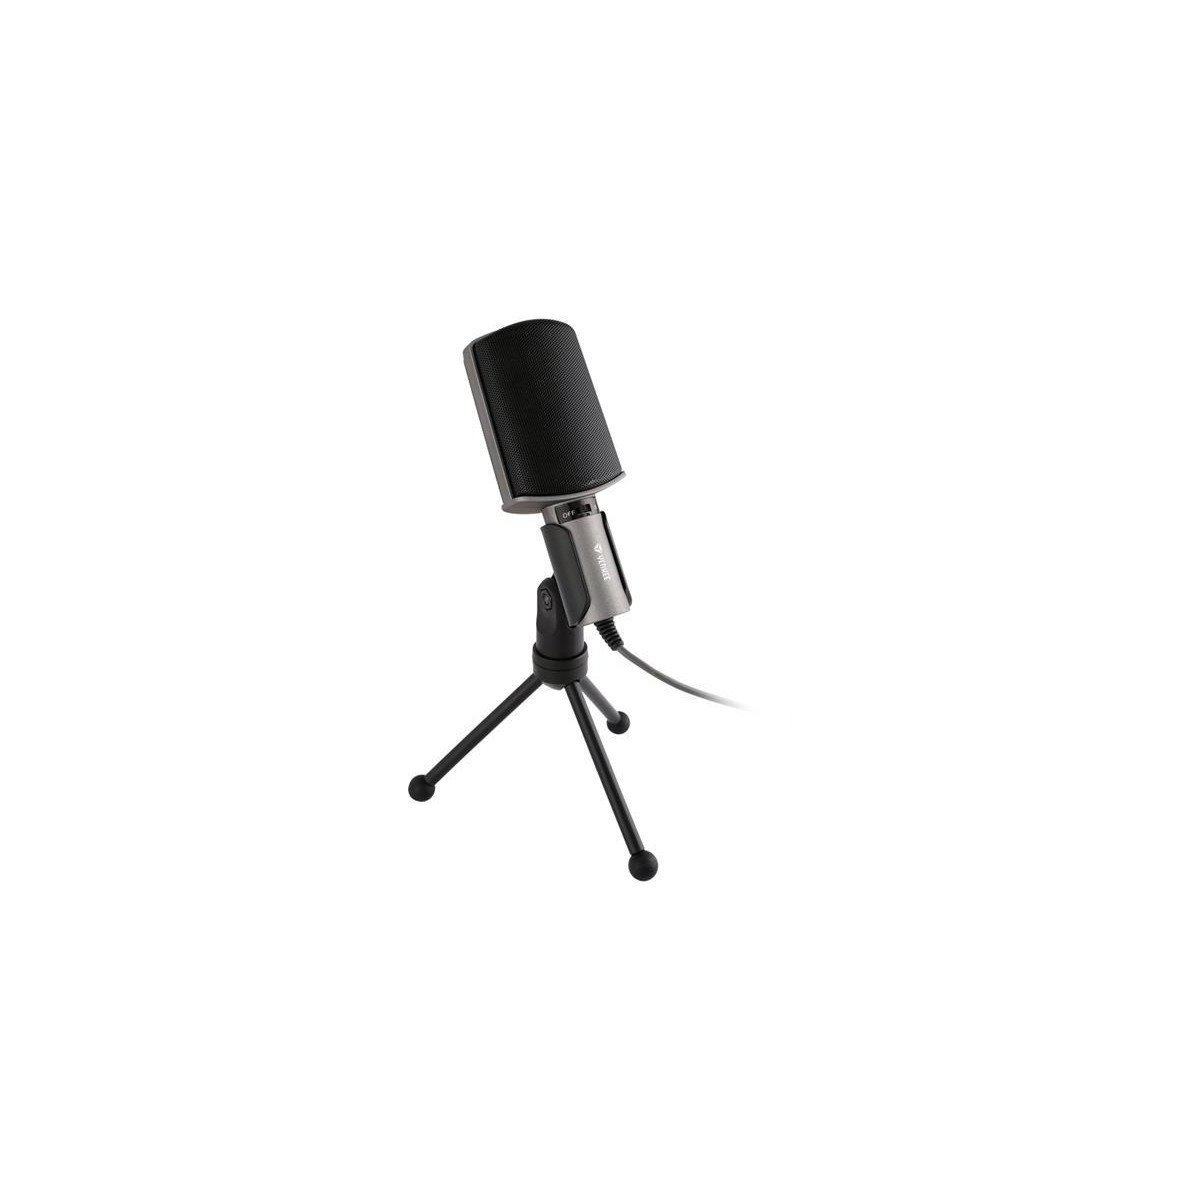 More about Mikrofon YENKEE YMC 1020GY